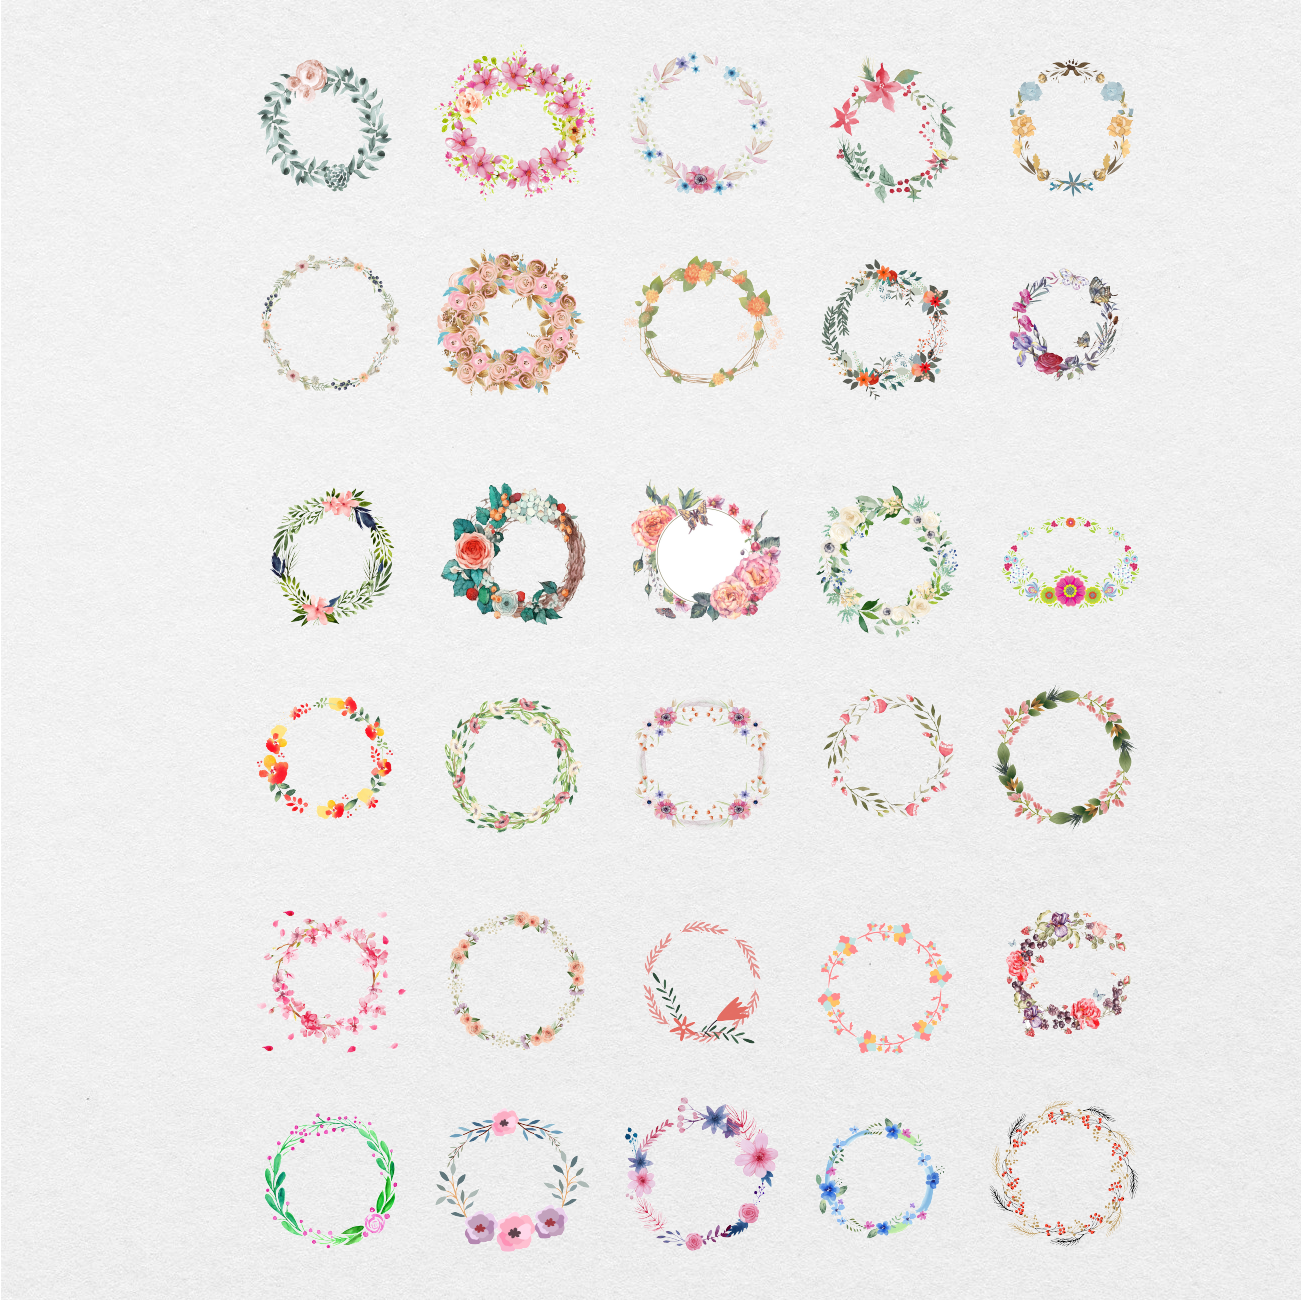 177 Digital Floral Wreath Sticker Bundle - Stationery Pal